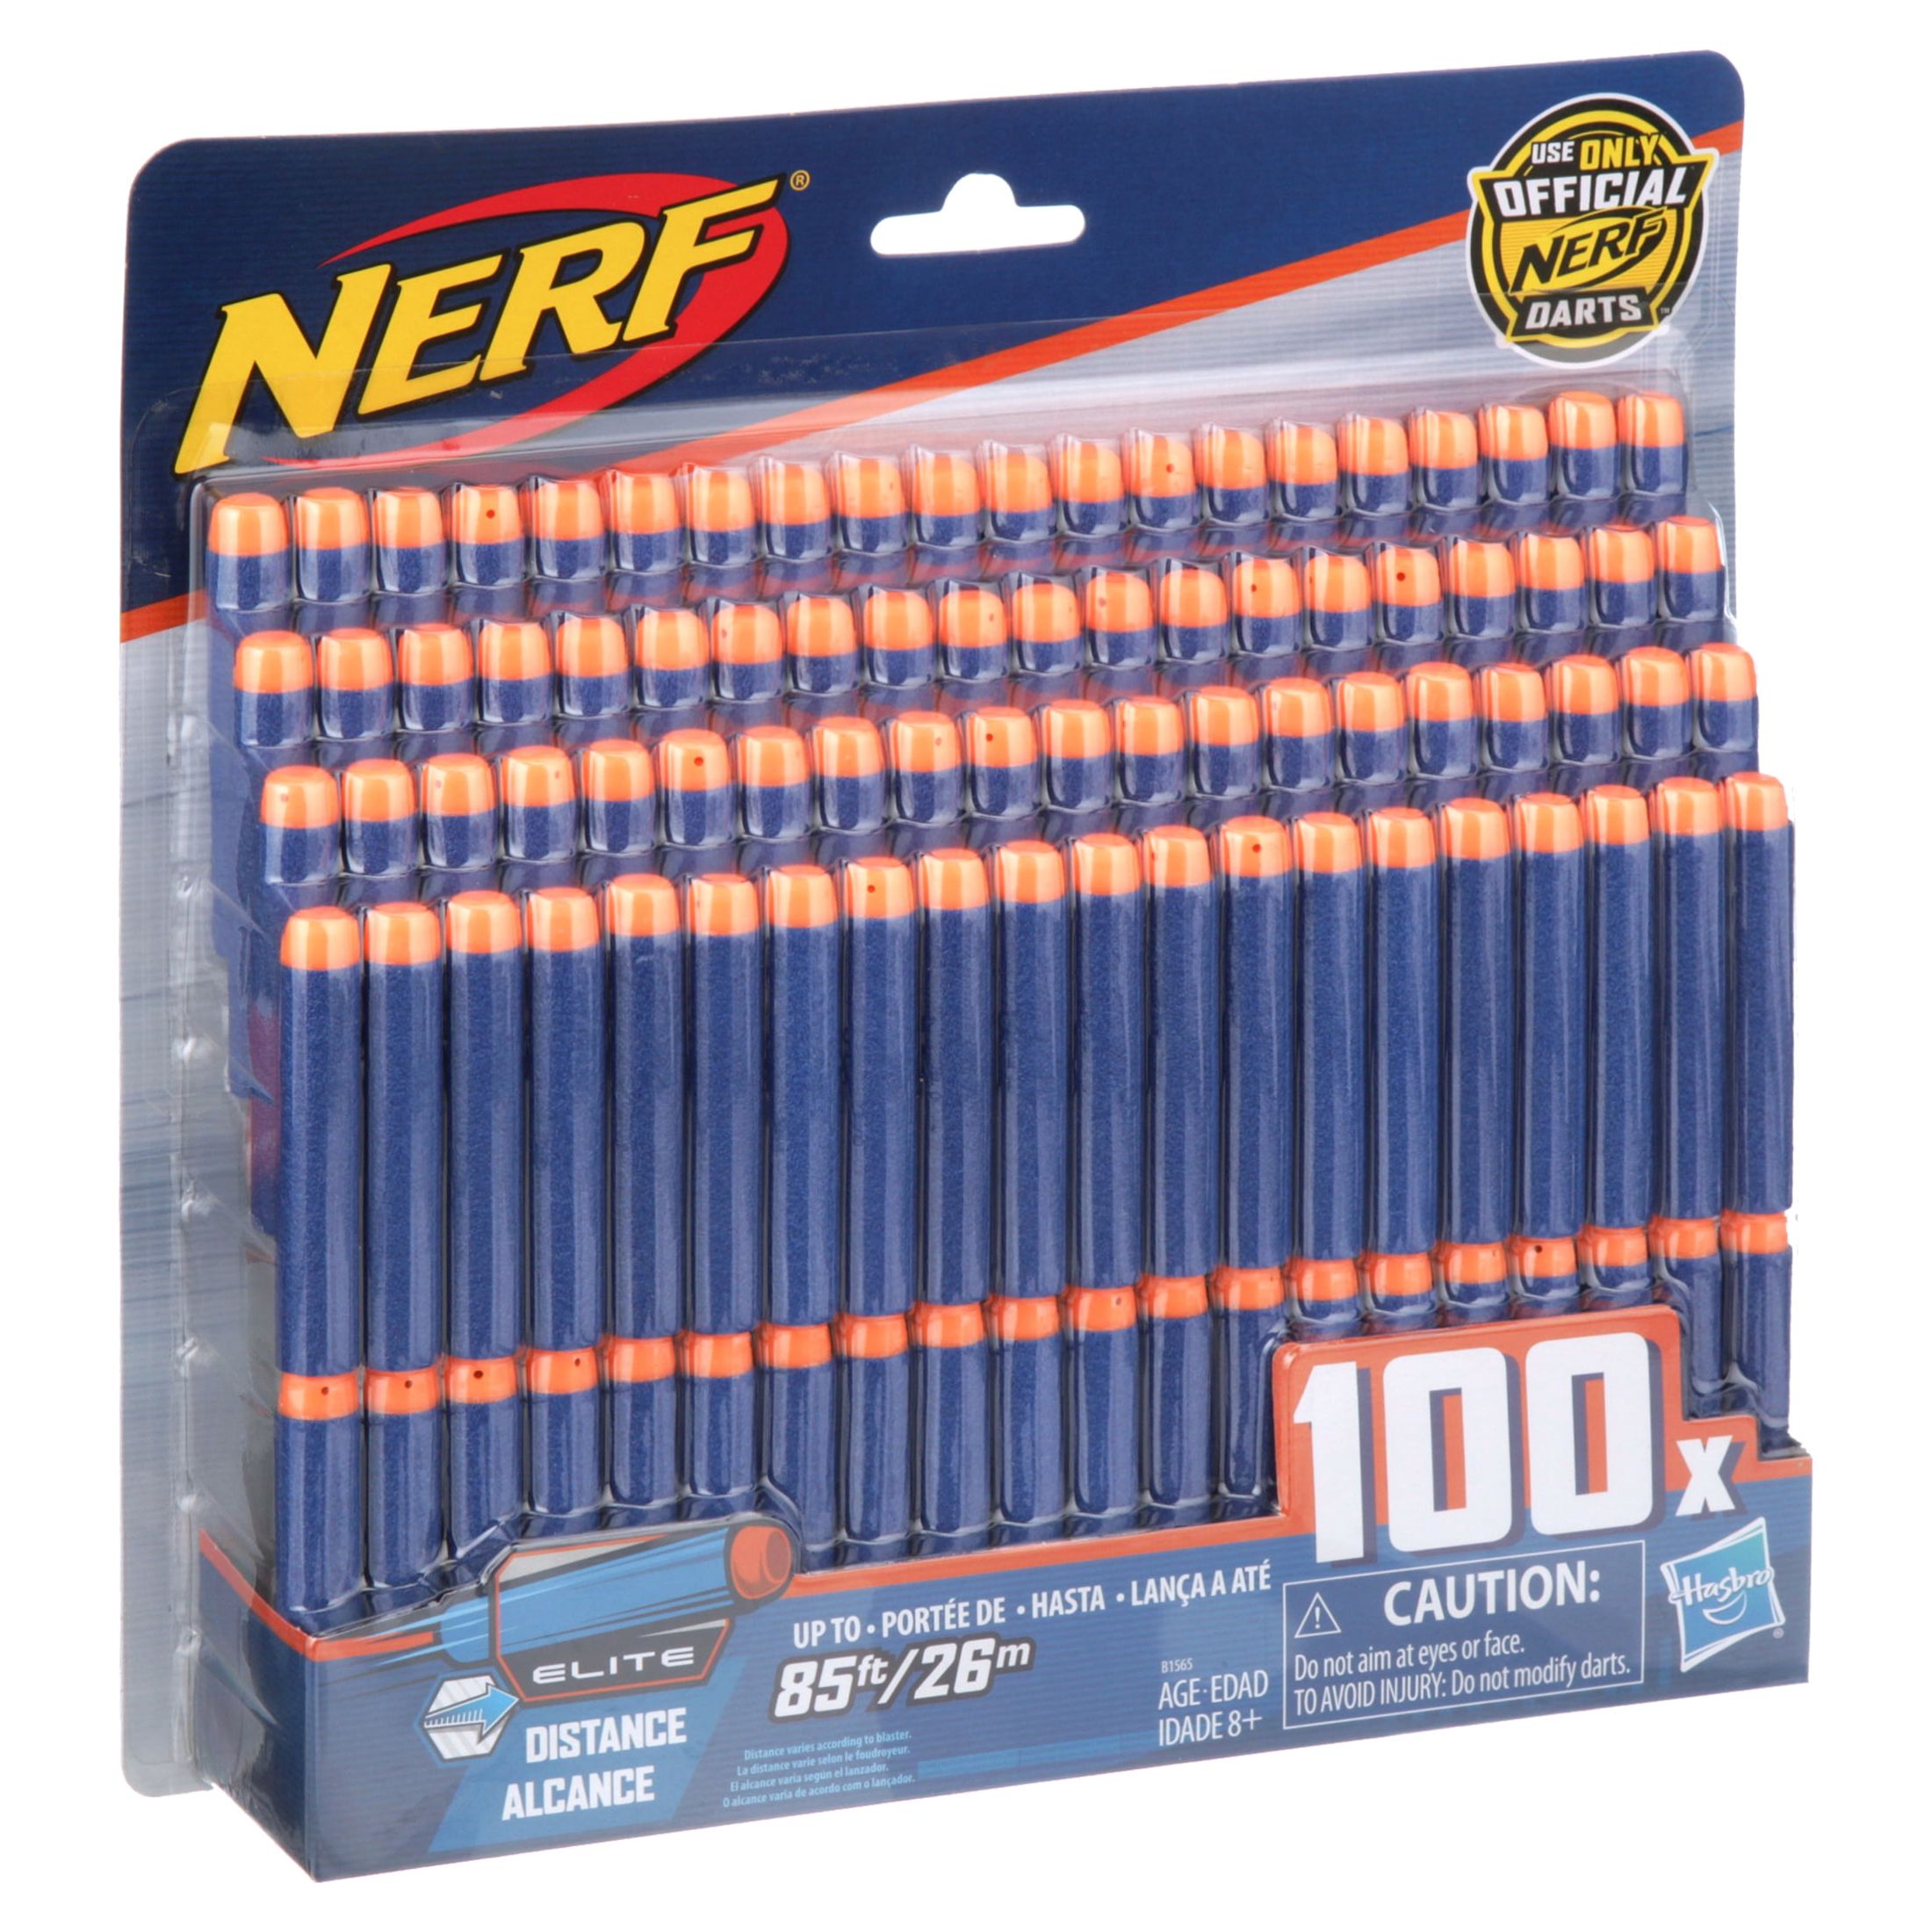 Nerf N-Strike Elite Kids Toy Blaster Refill with 100 Darts - image 4 of 7